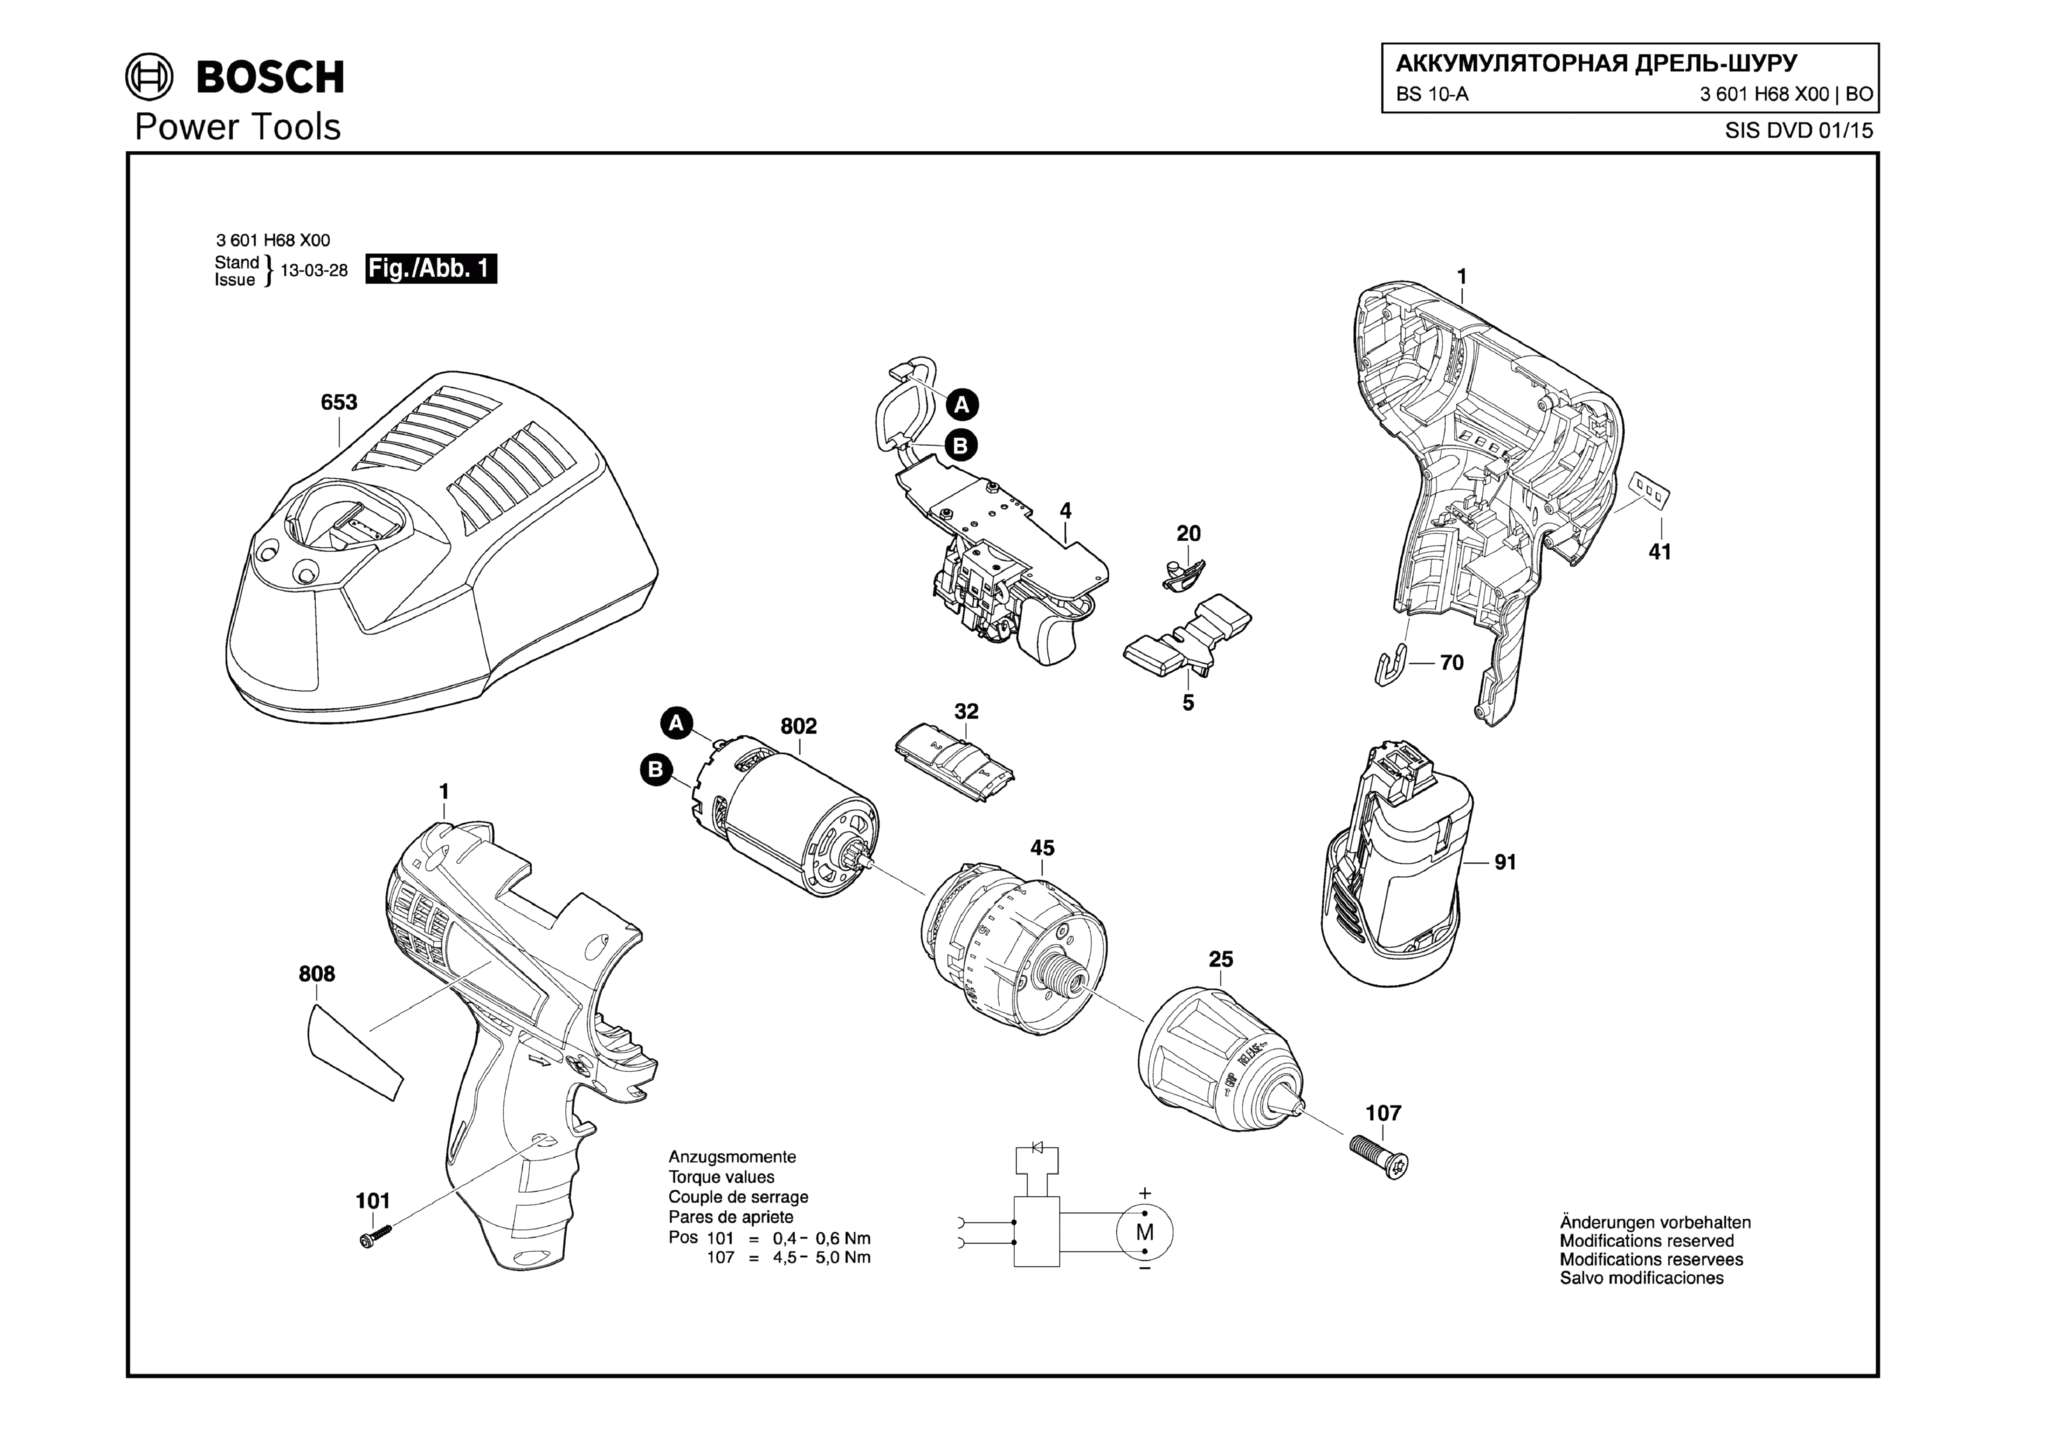 Запчасти, схема и деталировка Bosch BS 10-A (ТИП 3601H68X00)